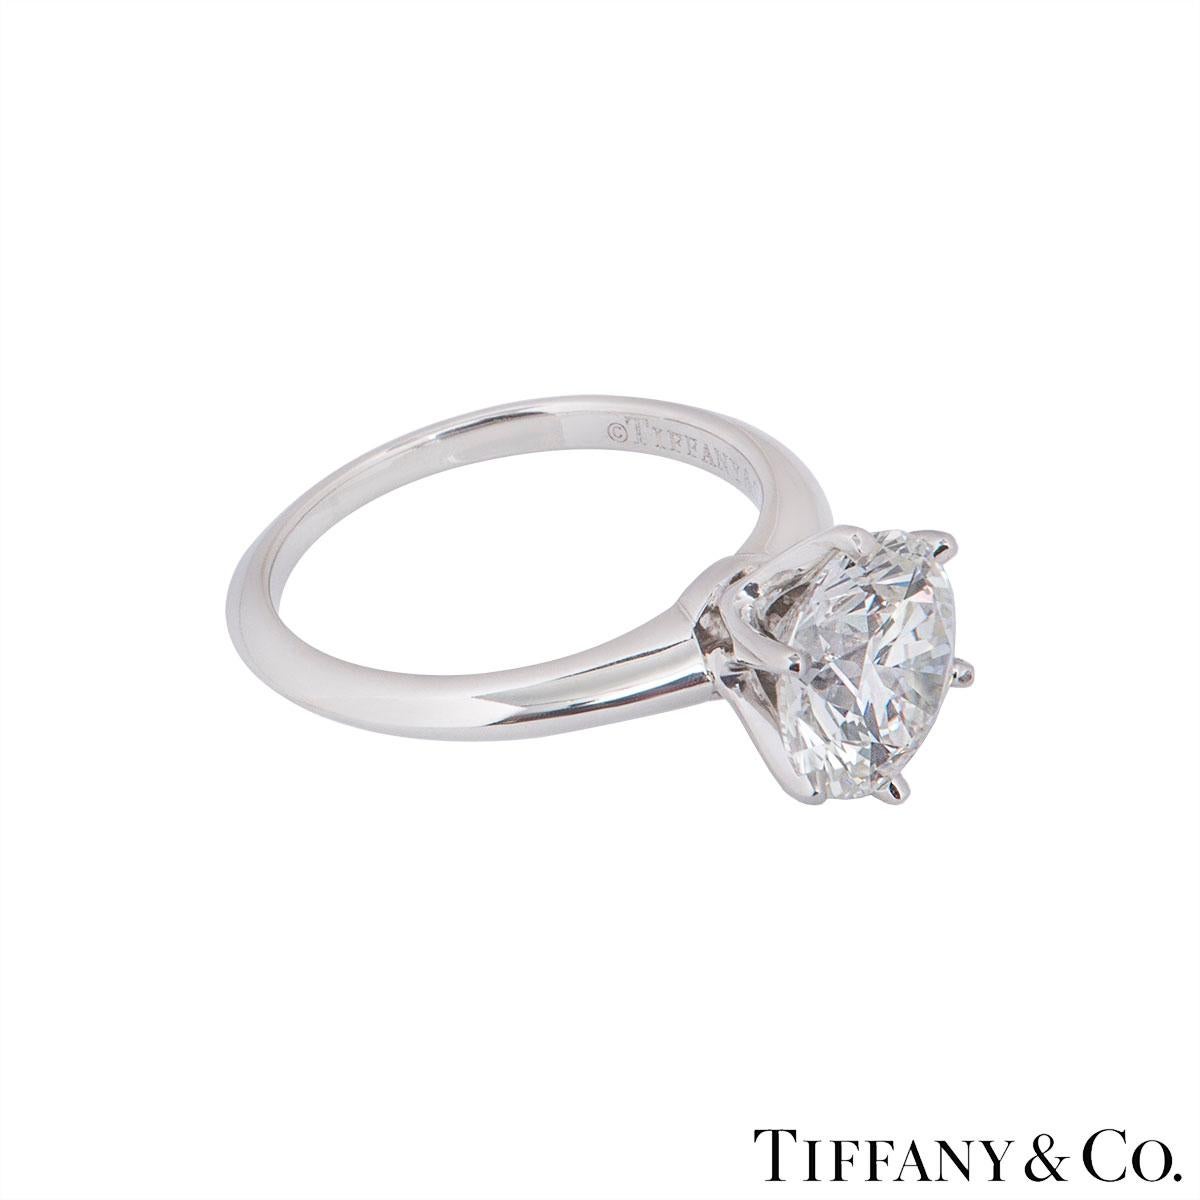 2.17 carat diamond tiffany